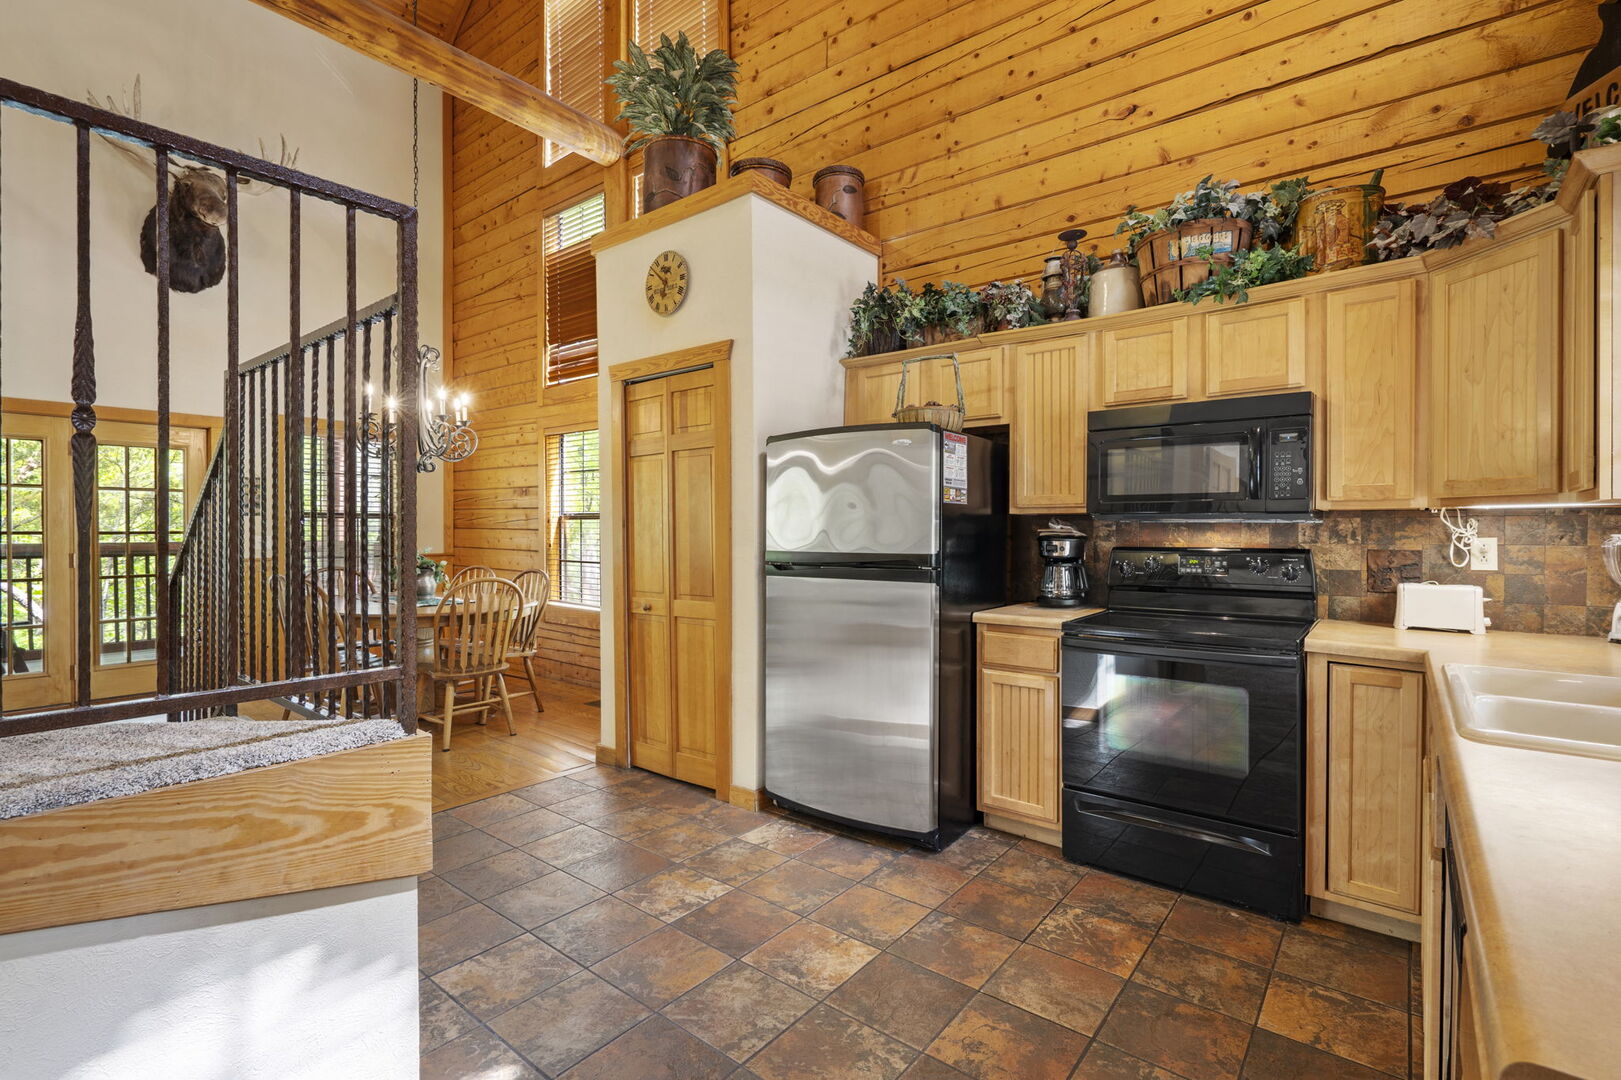 2 BR, 2 BA Cedar Log Cabin with Fireplace & Full Kitchen